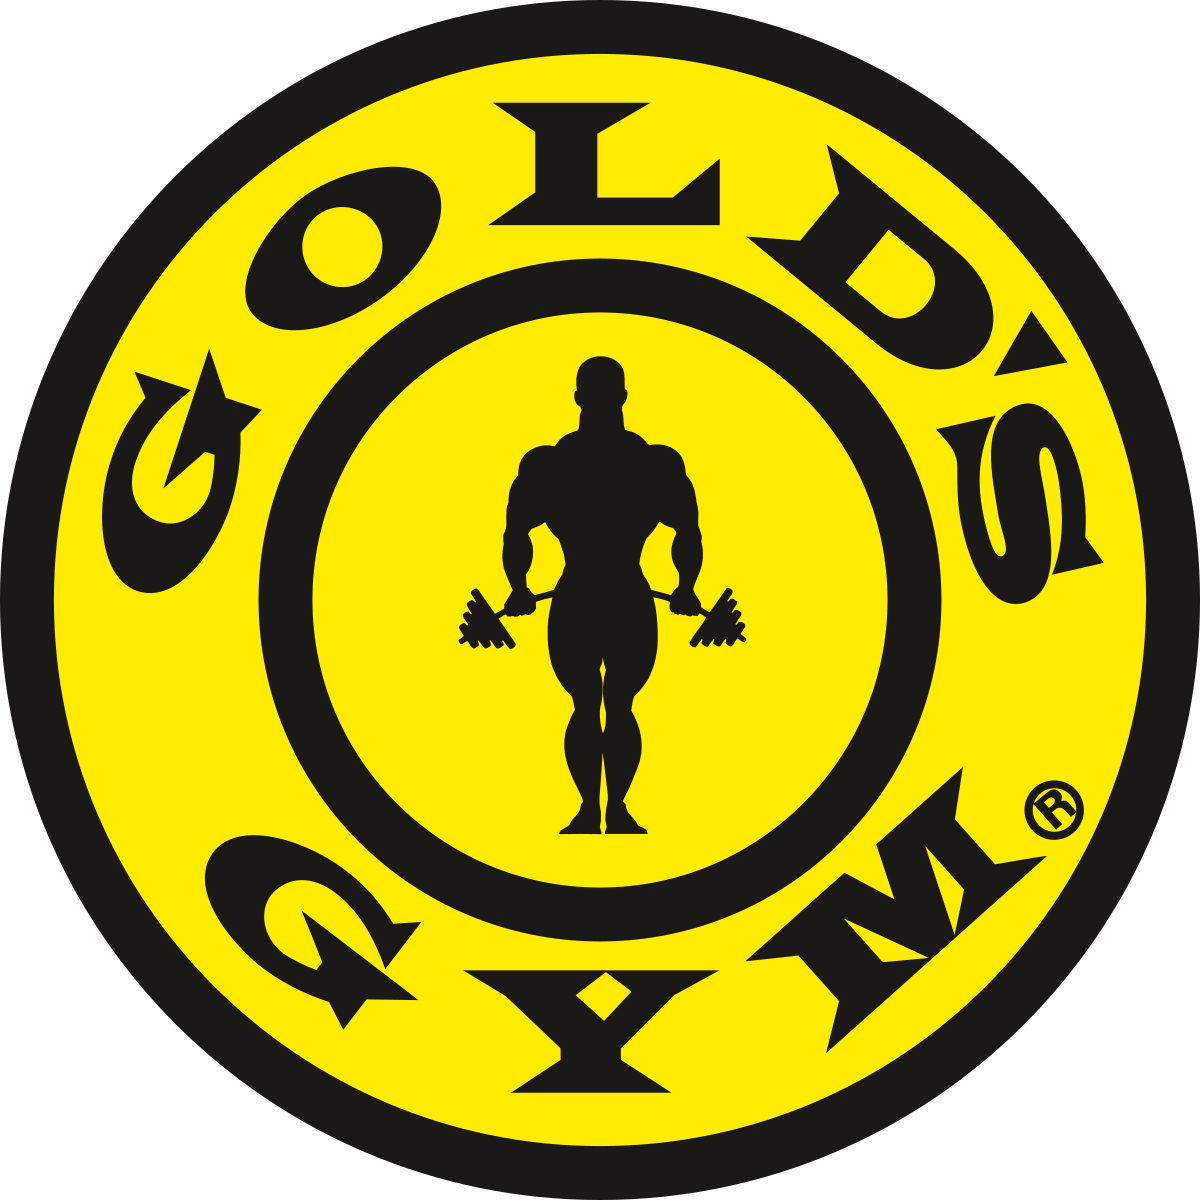 Gold's Gym - Wikipedia